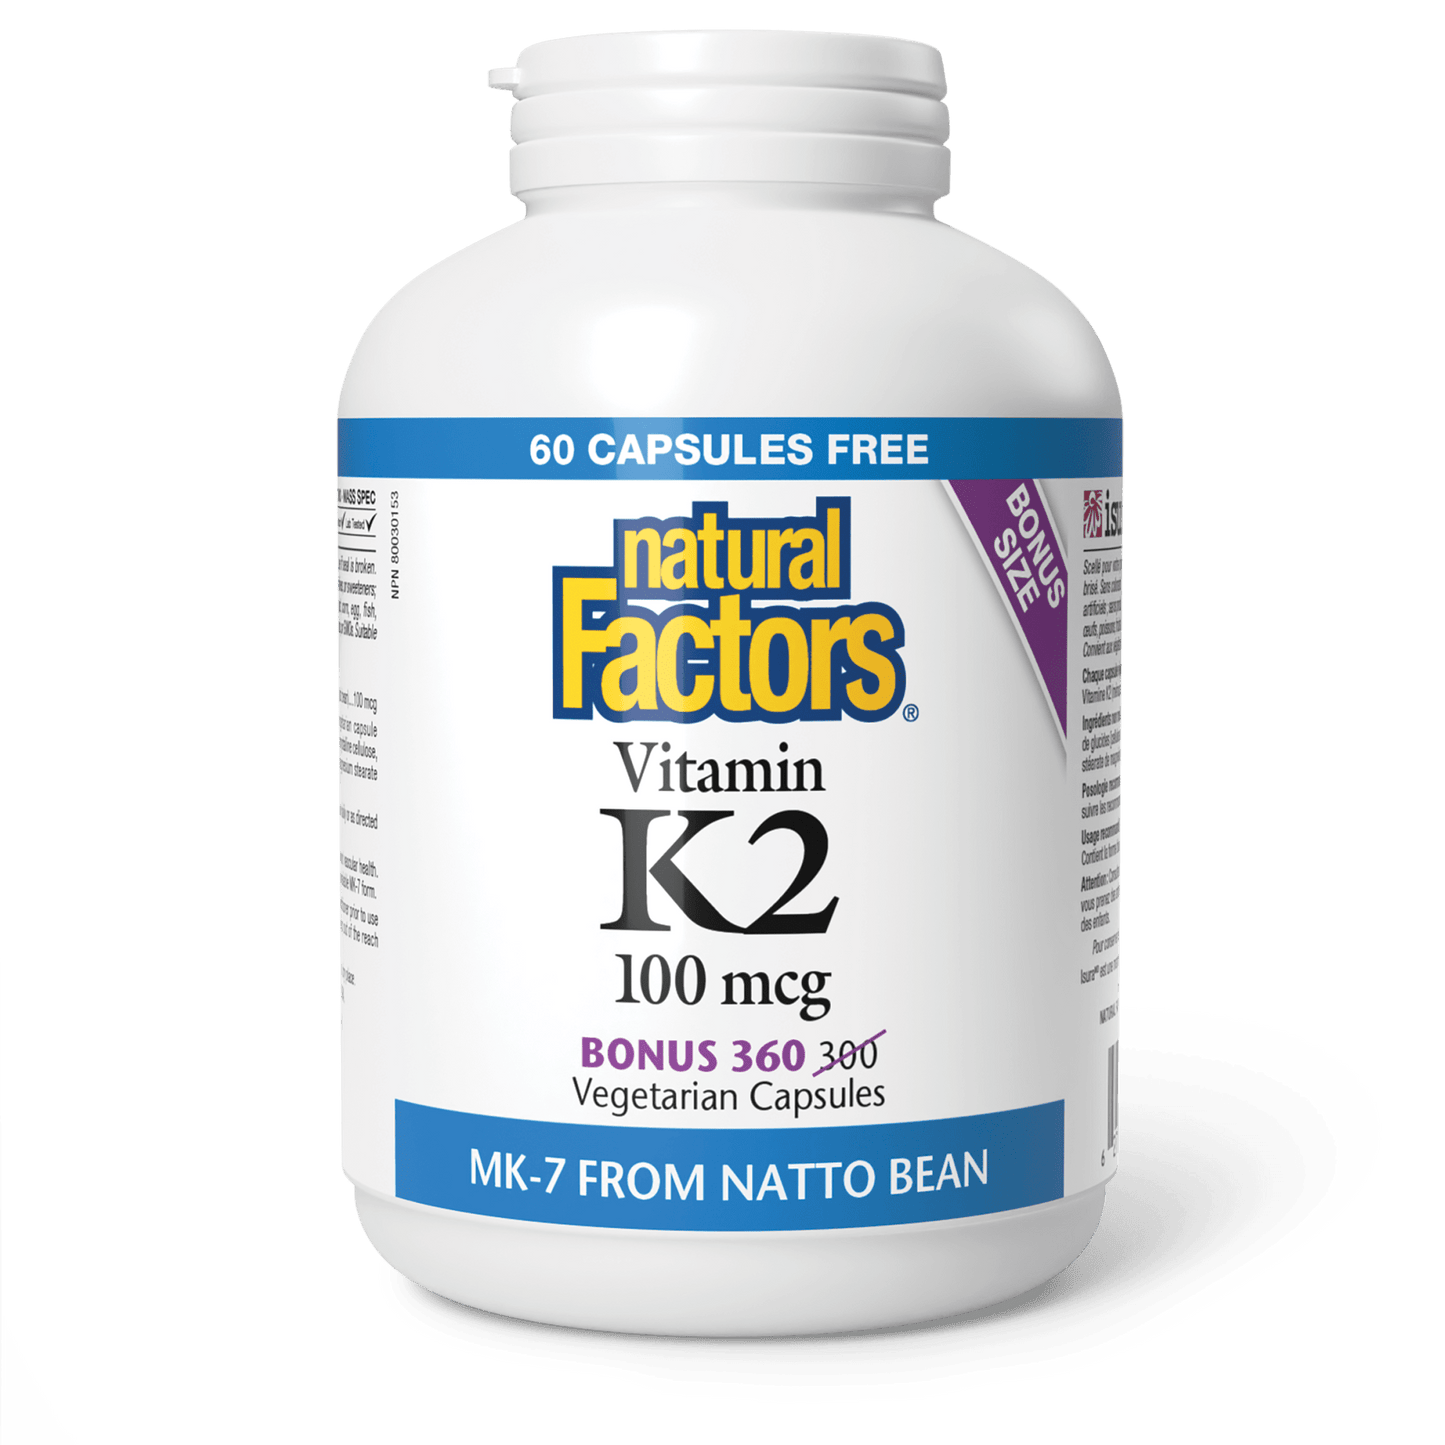 Vitamin K2 100 mcg, Natural Factors|v|image|8002